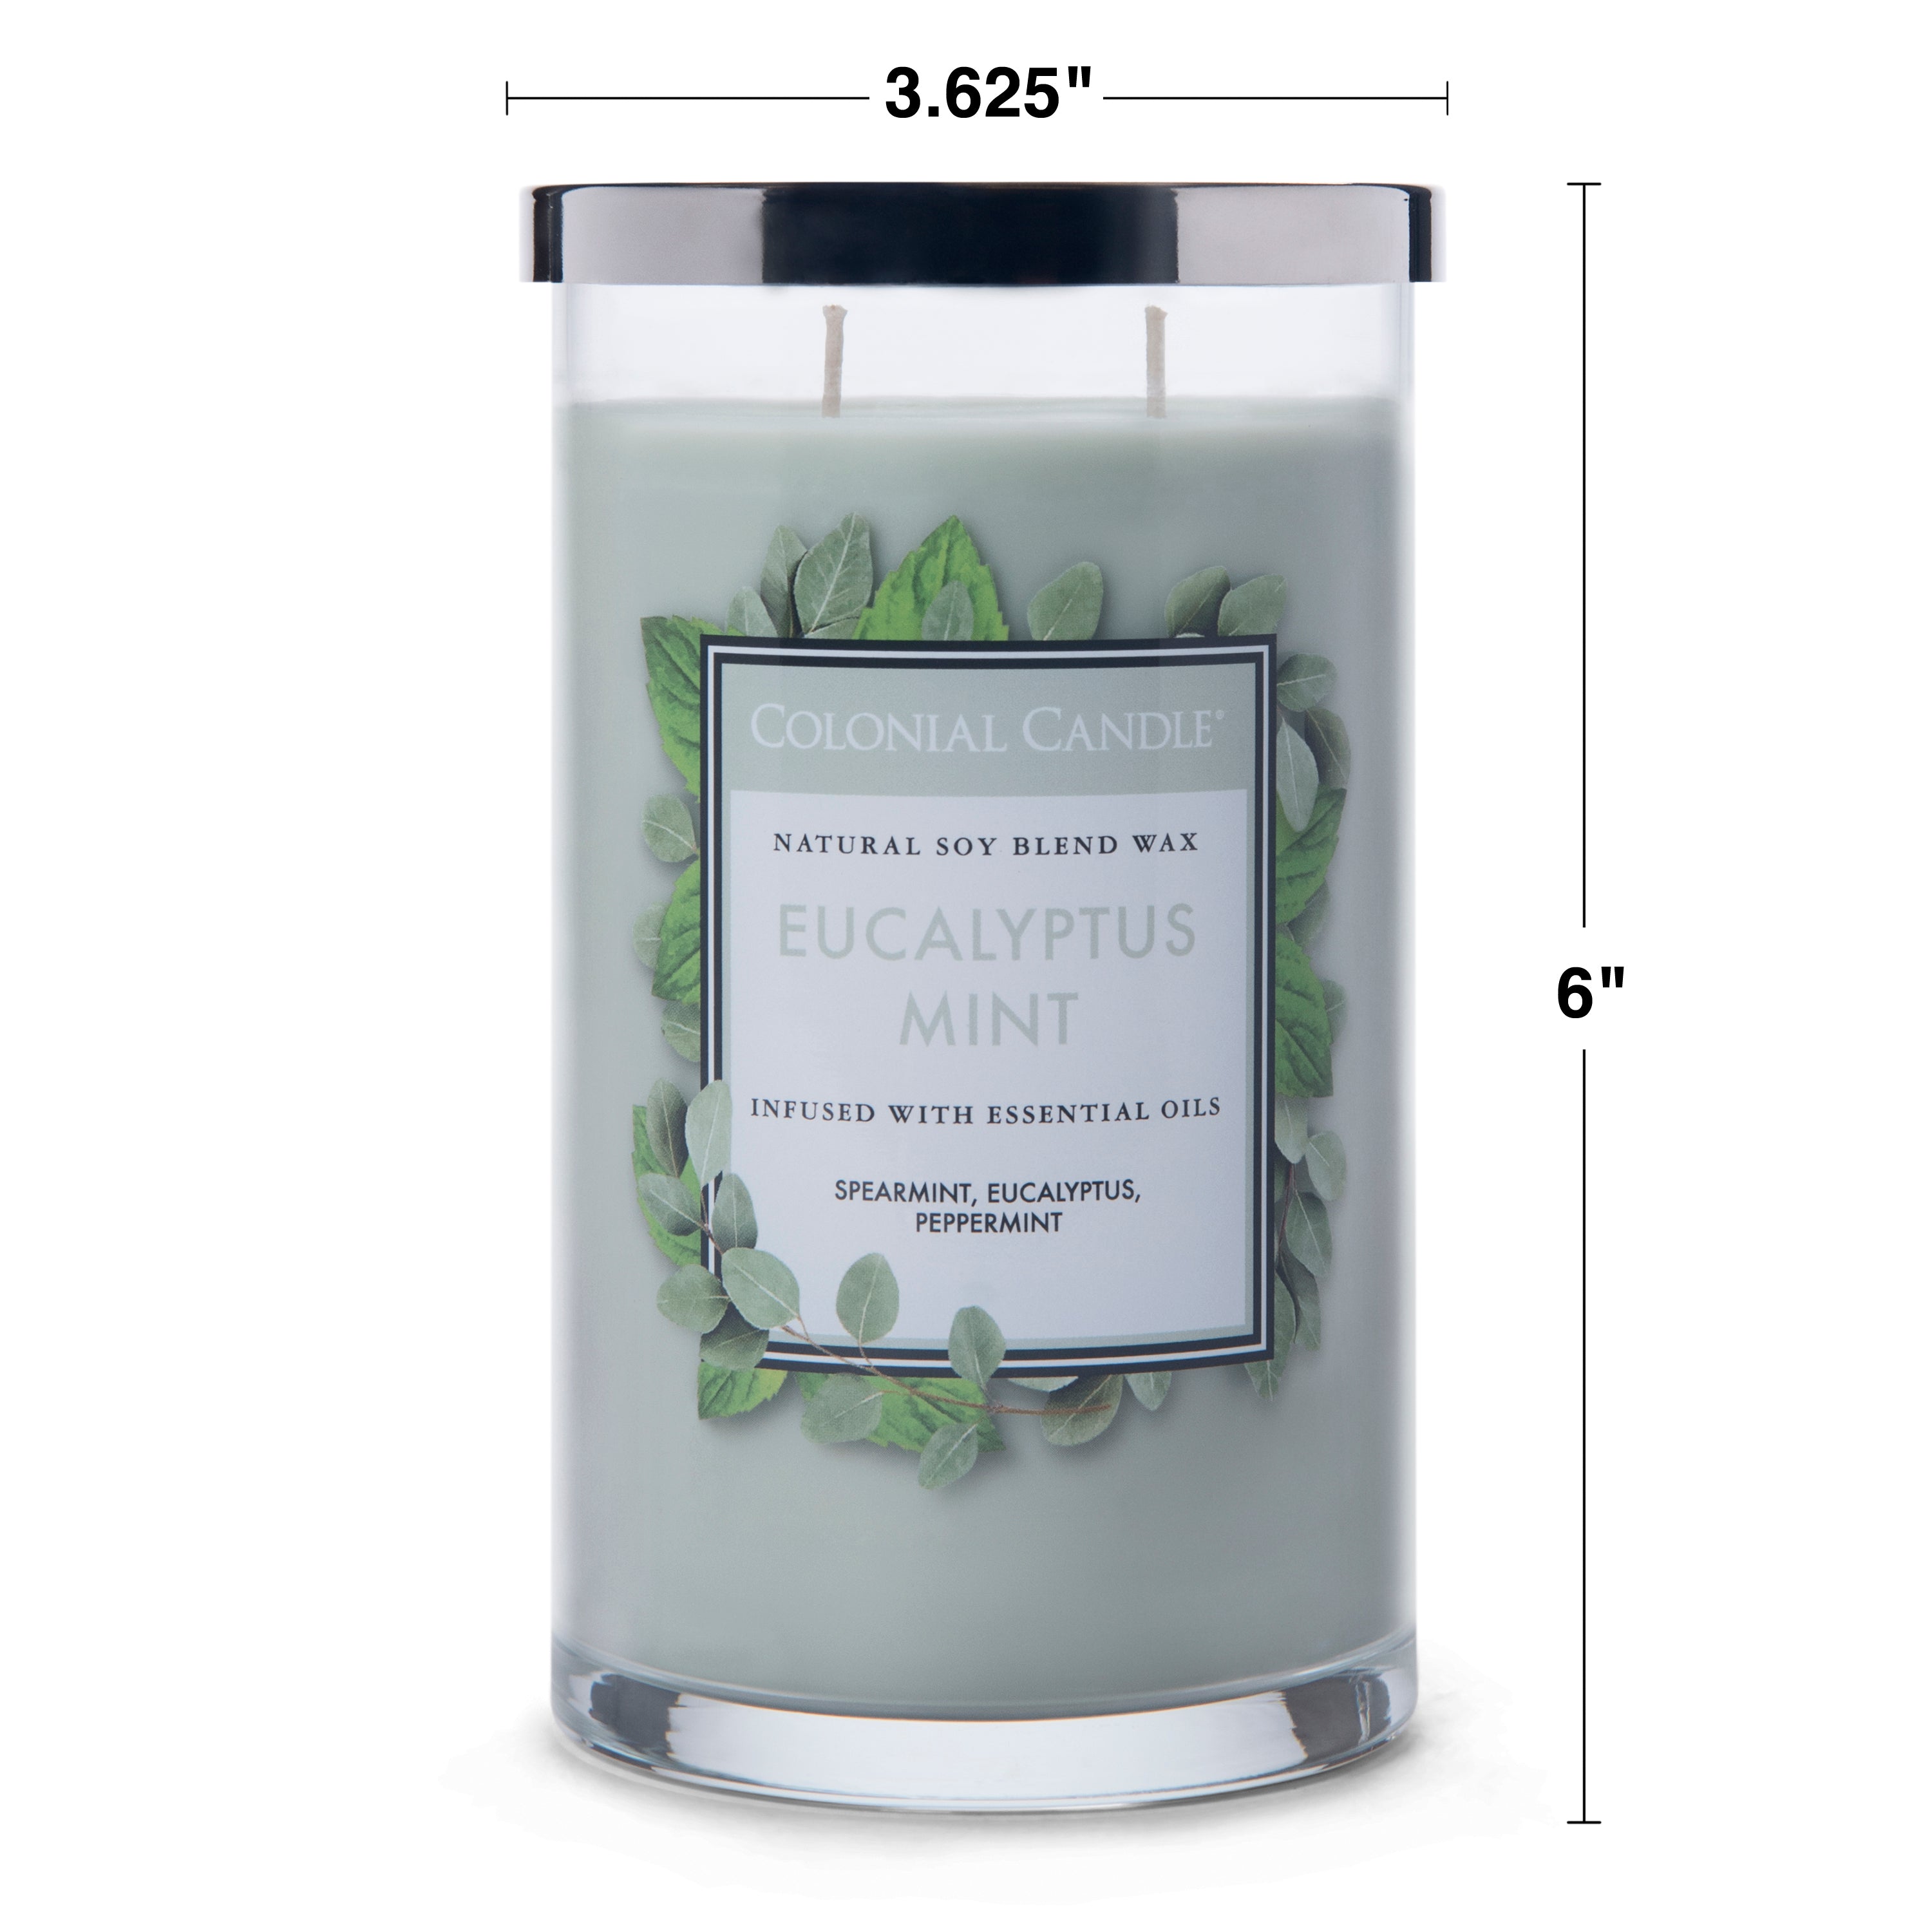 Yankee Candle Wax Tart Melt - Clean Cotton – Curios Gifts